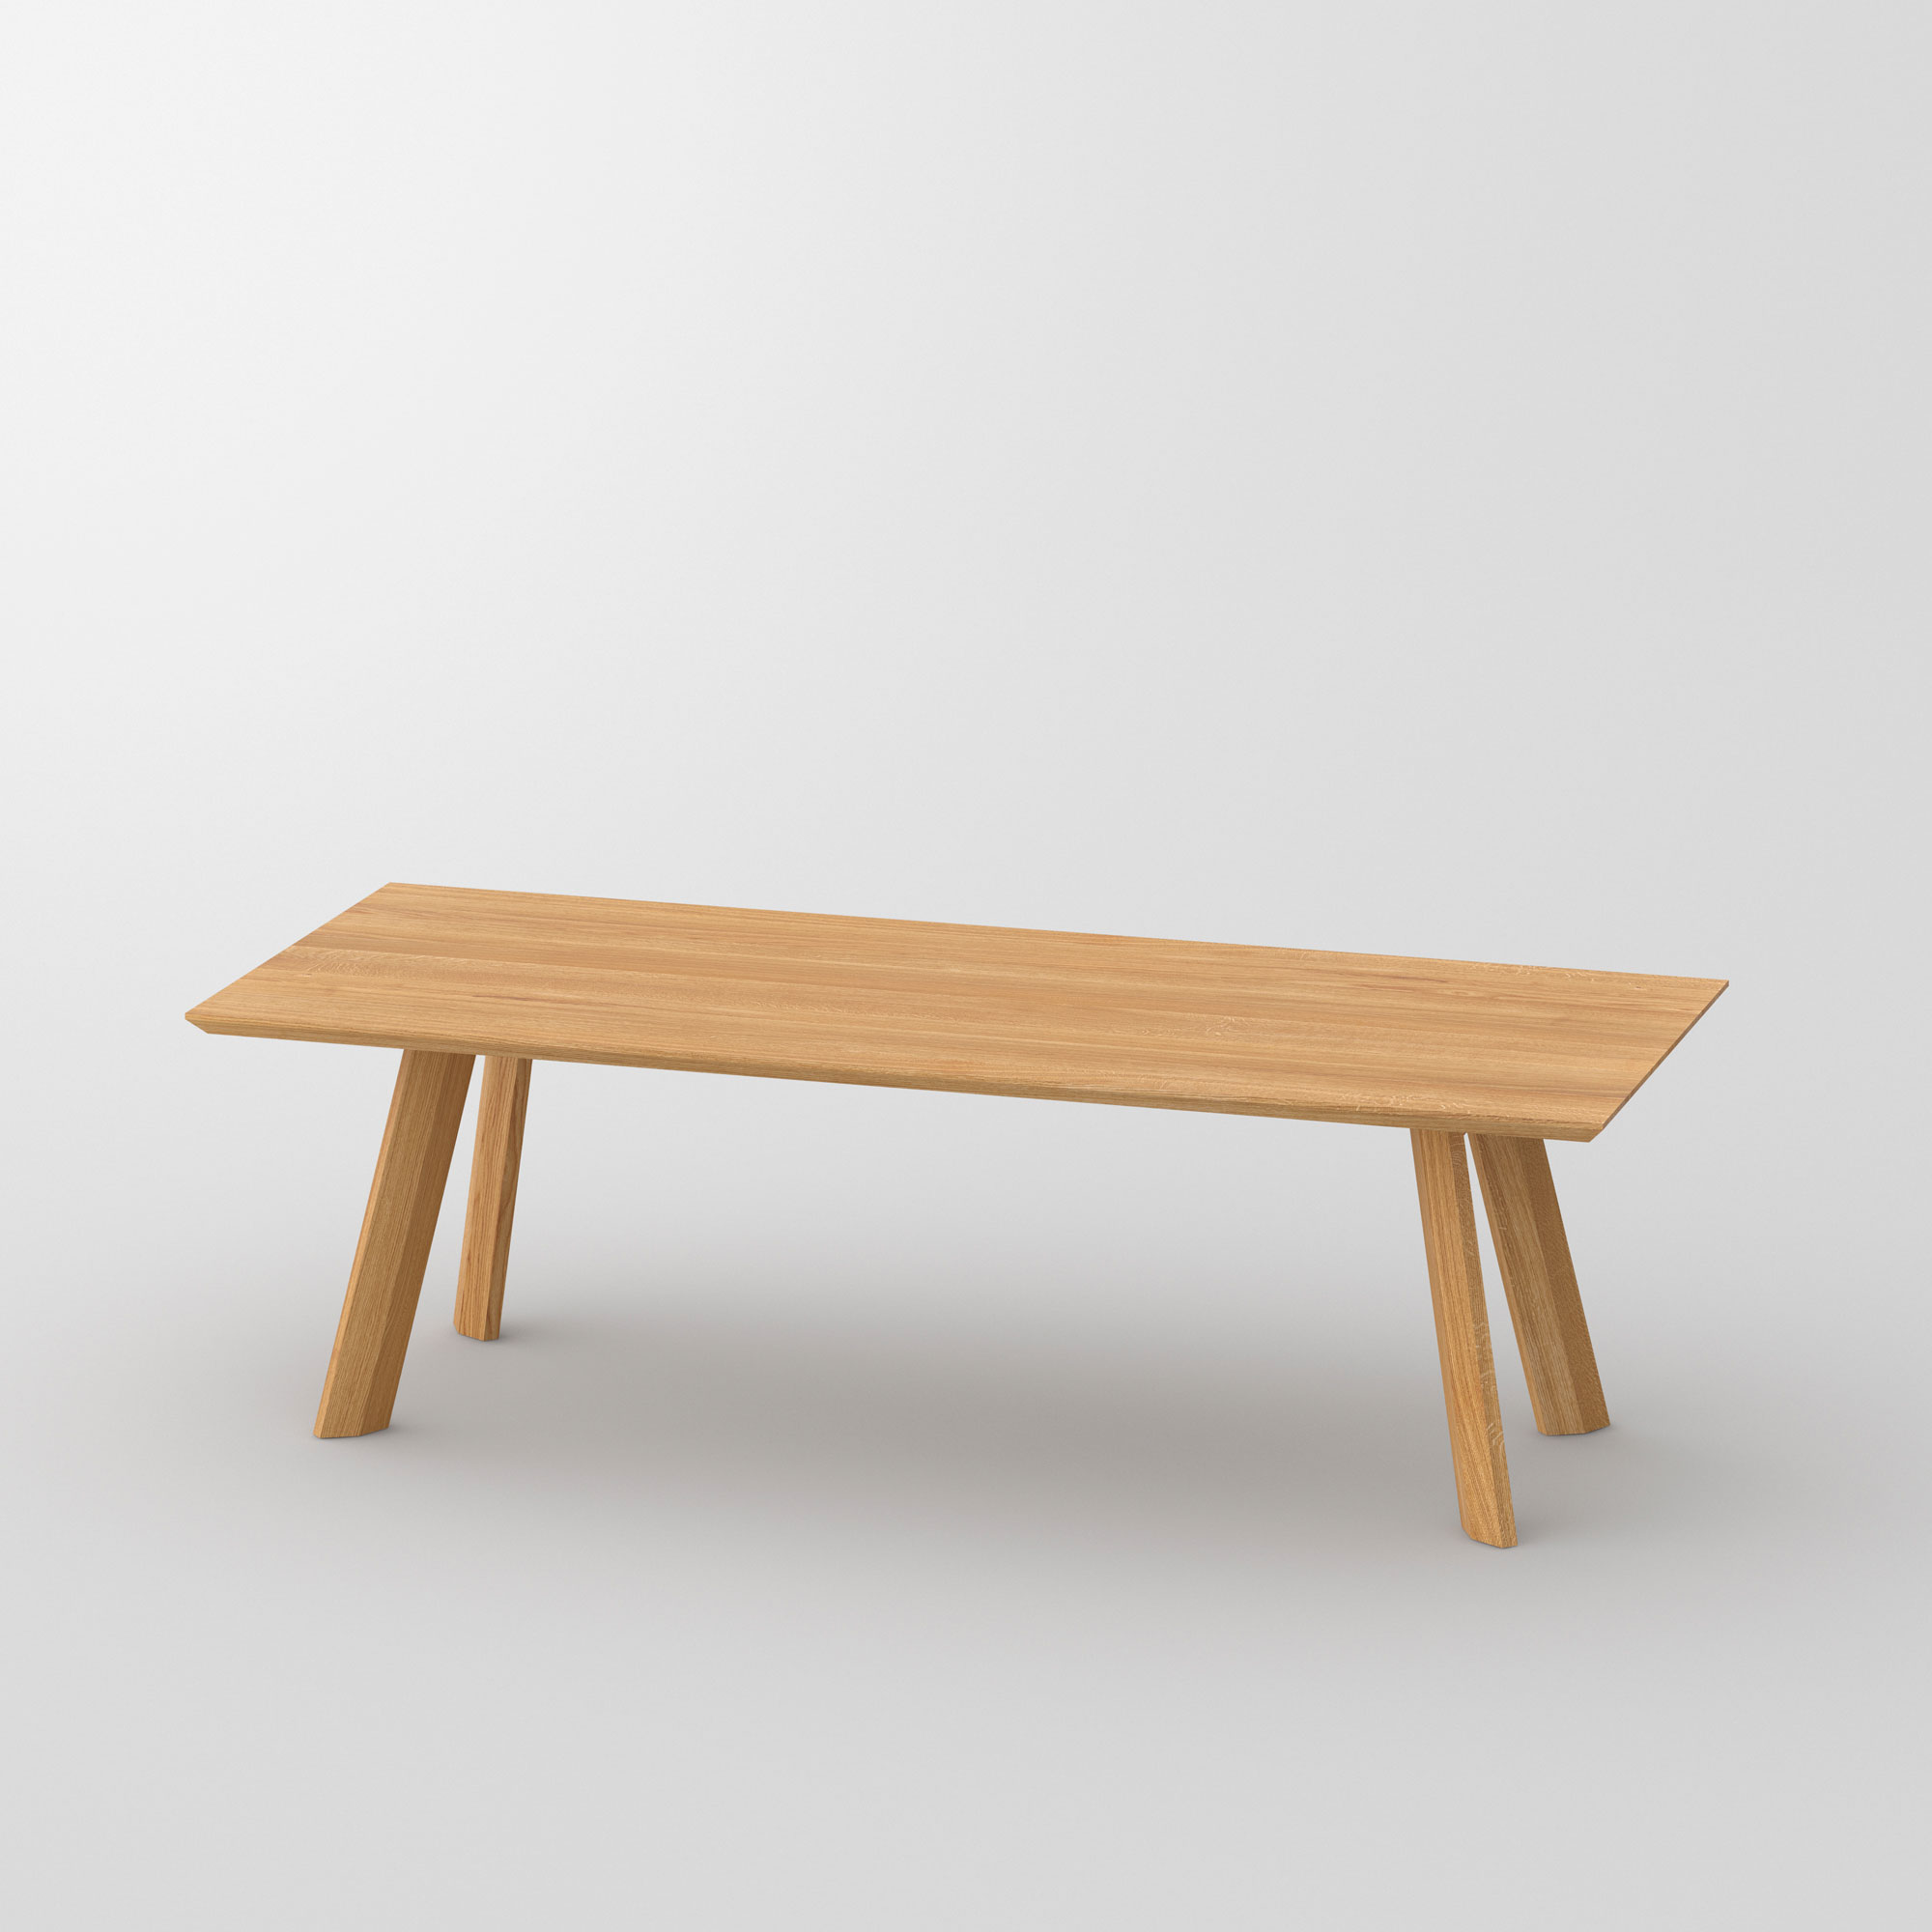 Designer Living Room Table RHOMBI BASIC cam1 custom made in solid wood by vitamin design